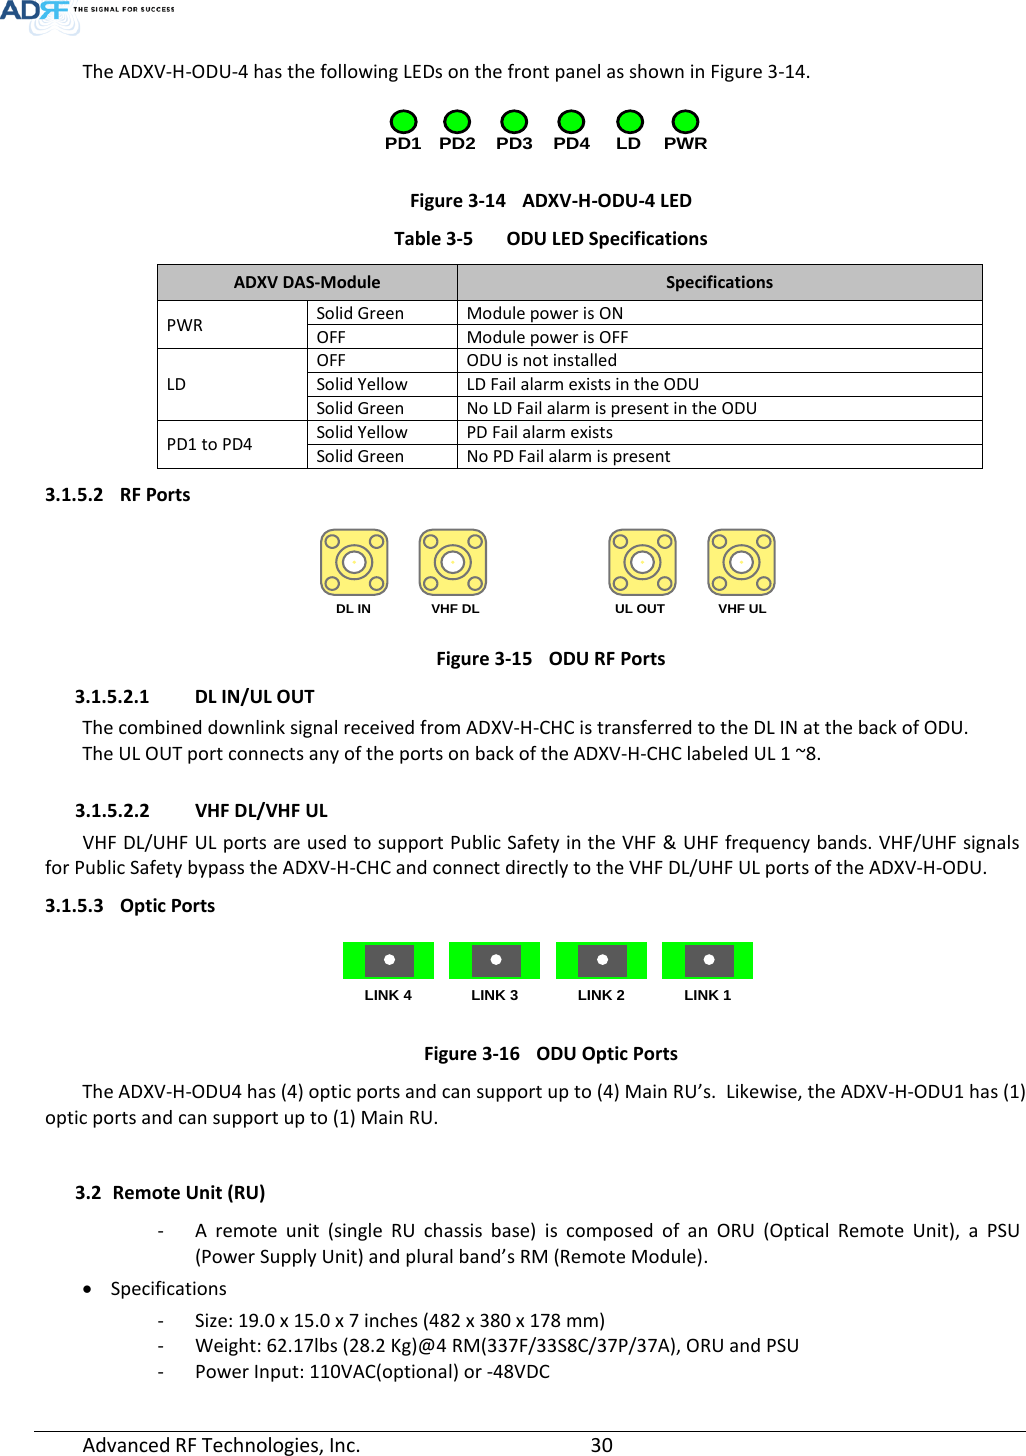 Page 30 of ADRF KOREA ADXV-R-336 DAS (Distributed Antenna System) User Manual ADXV DAS